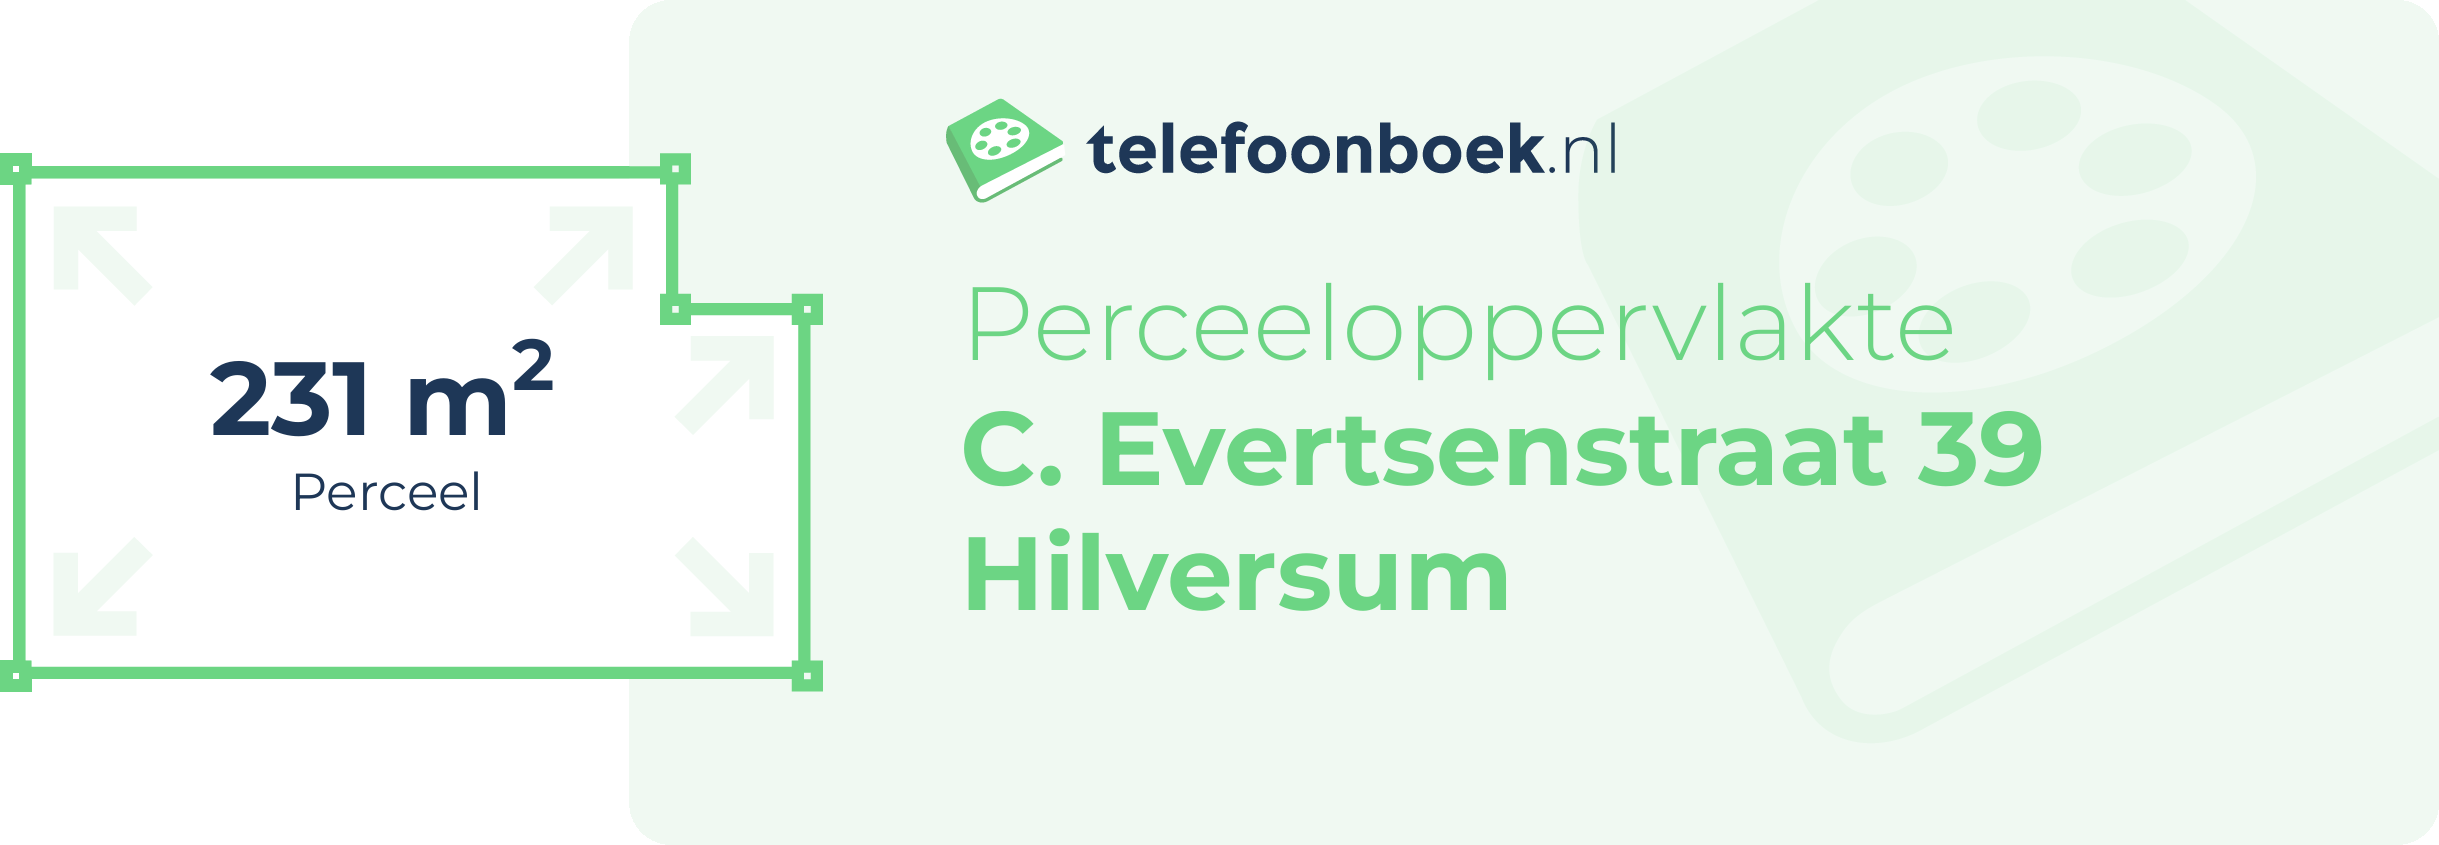 Perceeloppervlakte C. Evertsenstraat 39 Hilversum